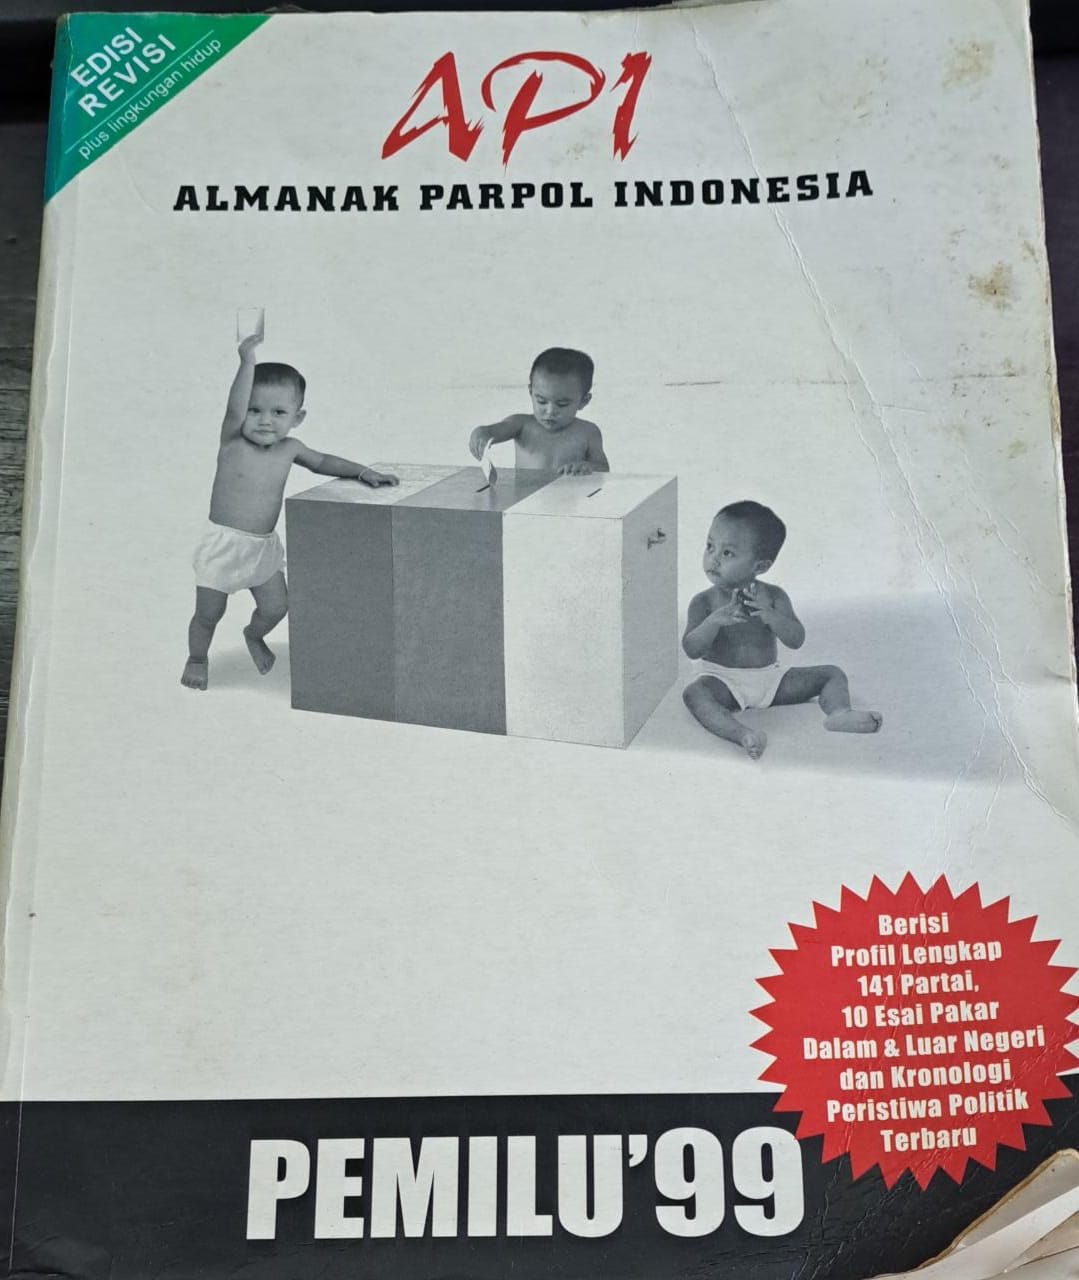 Api almanak parpol Indonesia :  Pemilu'99